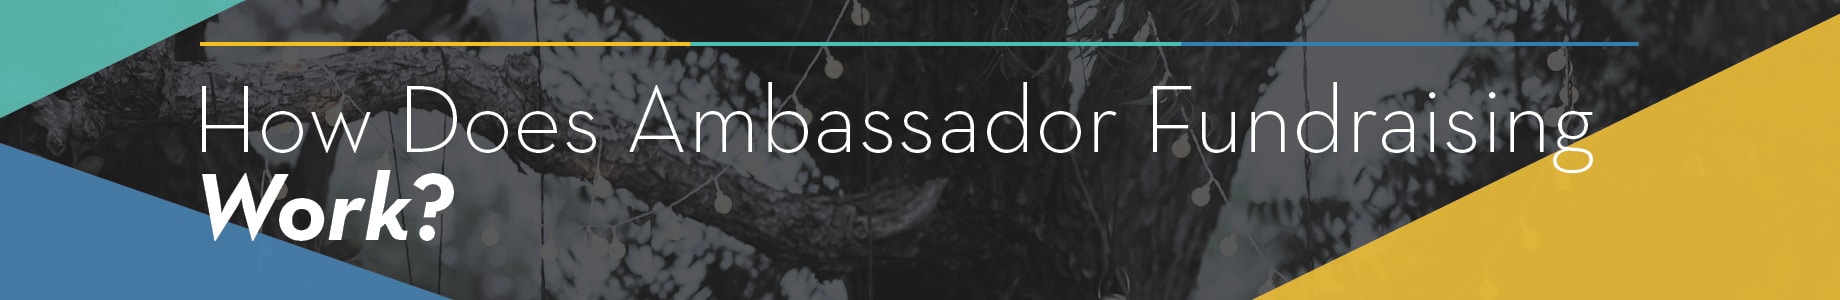 How Does Ambassador Fundraising Work?